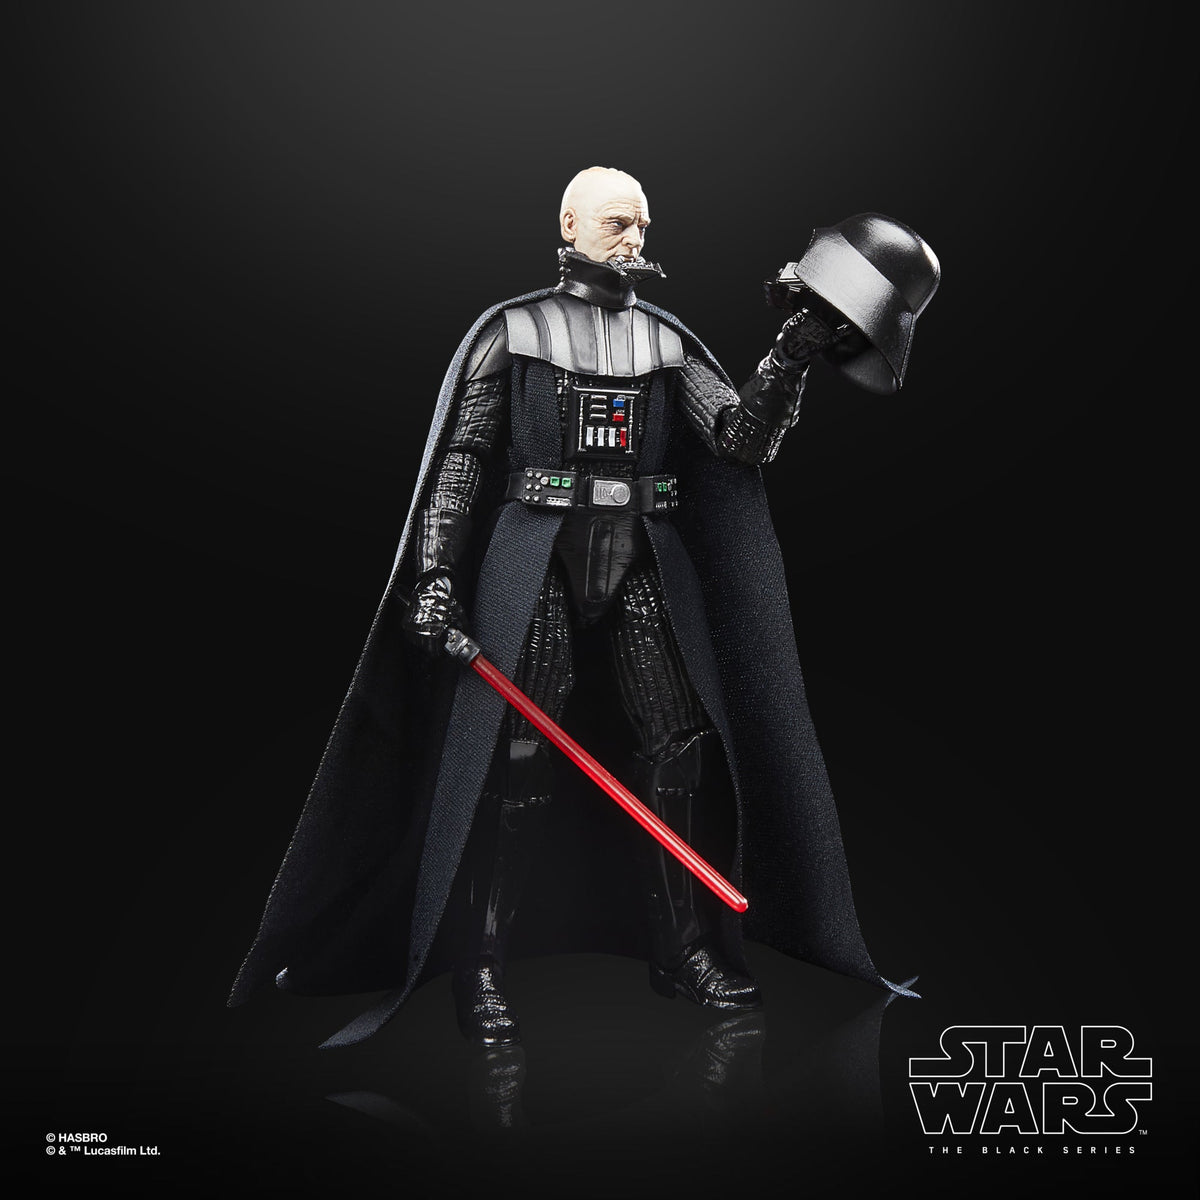 Star Wars The Black Series Darth Vader Toy 6-Inch-Scale Star Wars